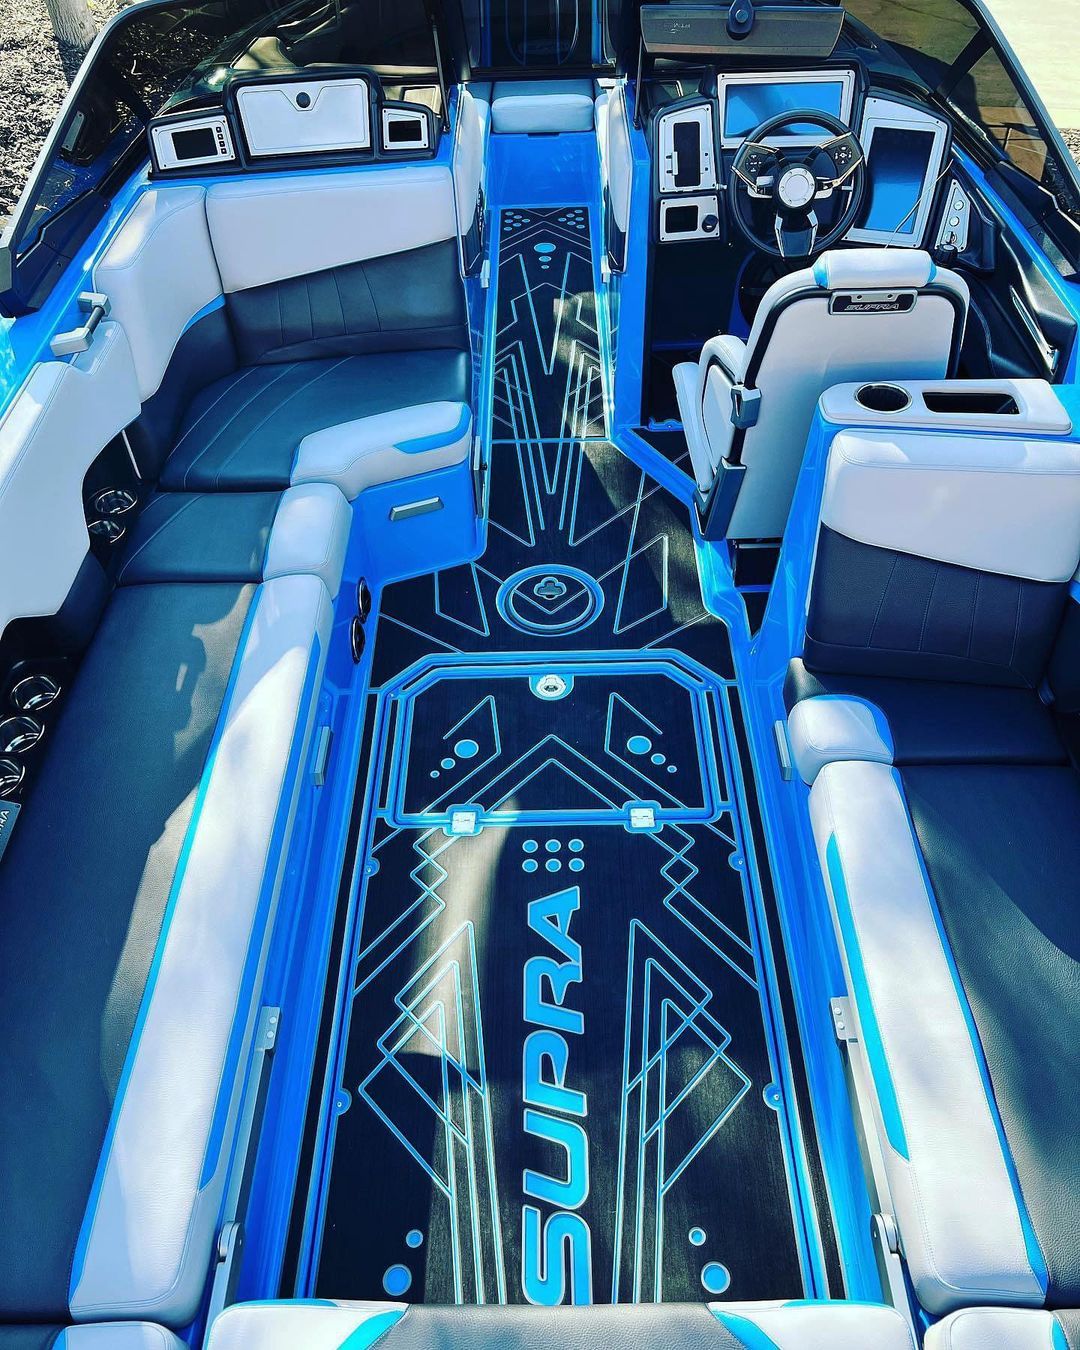 supra wake gatorstep boat flooring decking custom design black, blue